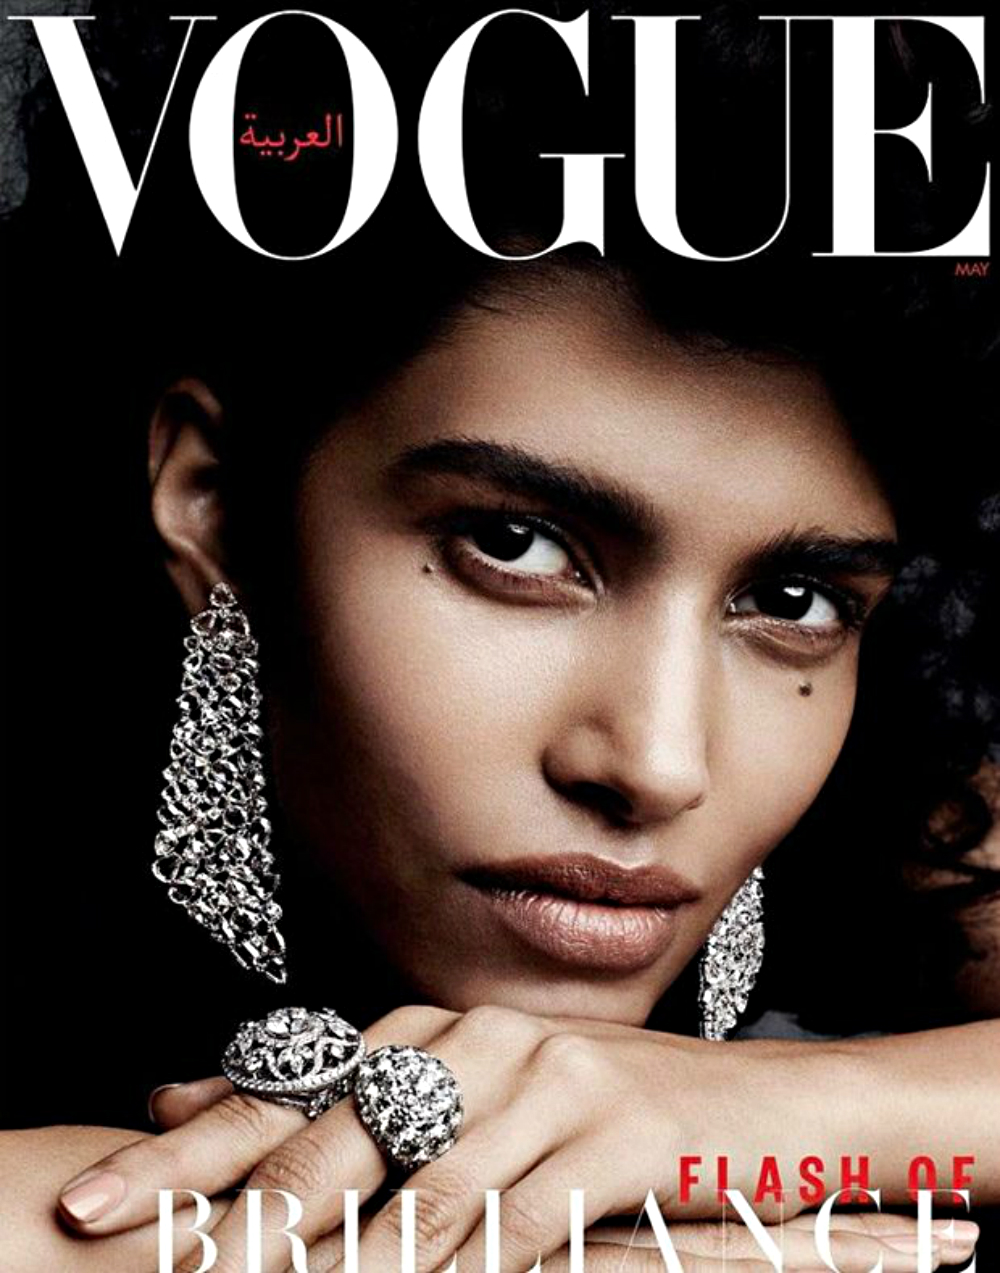 Vogue's Covers: Vogue Arabia